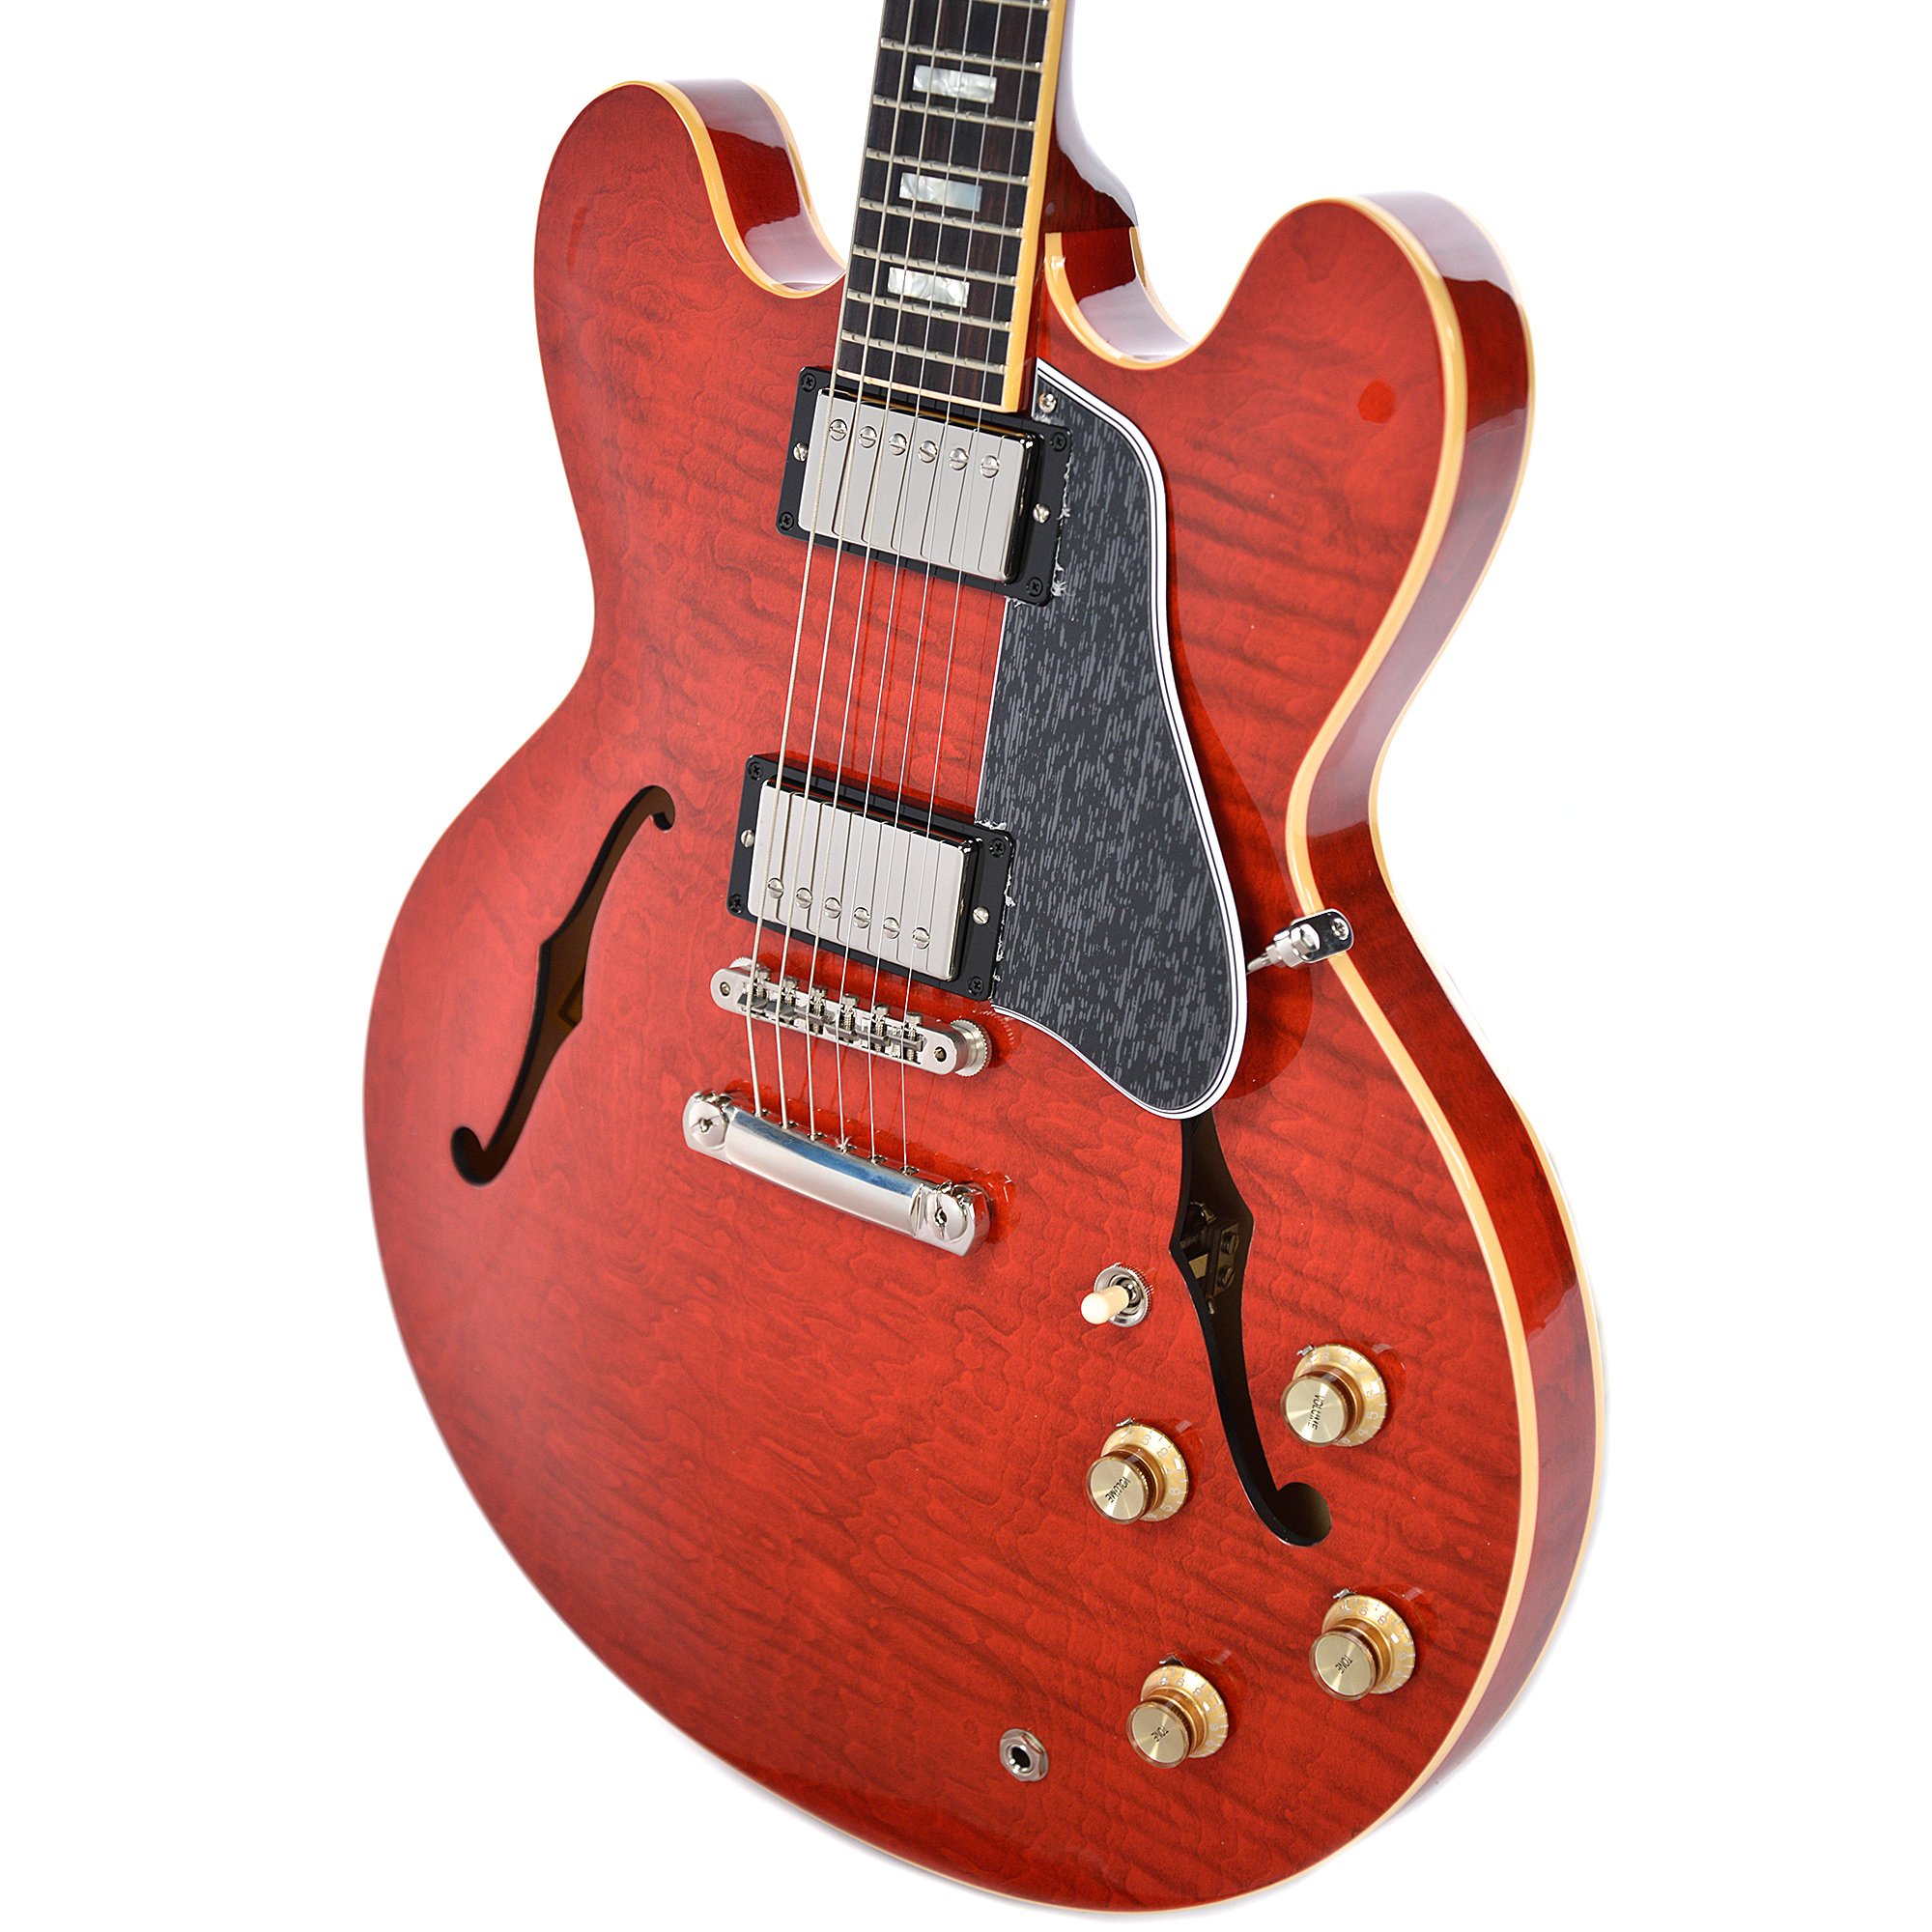 Gibson Es-335 Figured 2018 Ltd - Antique Sixties Cherry - Semi hollow elektriche gitaar - Variation 2